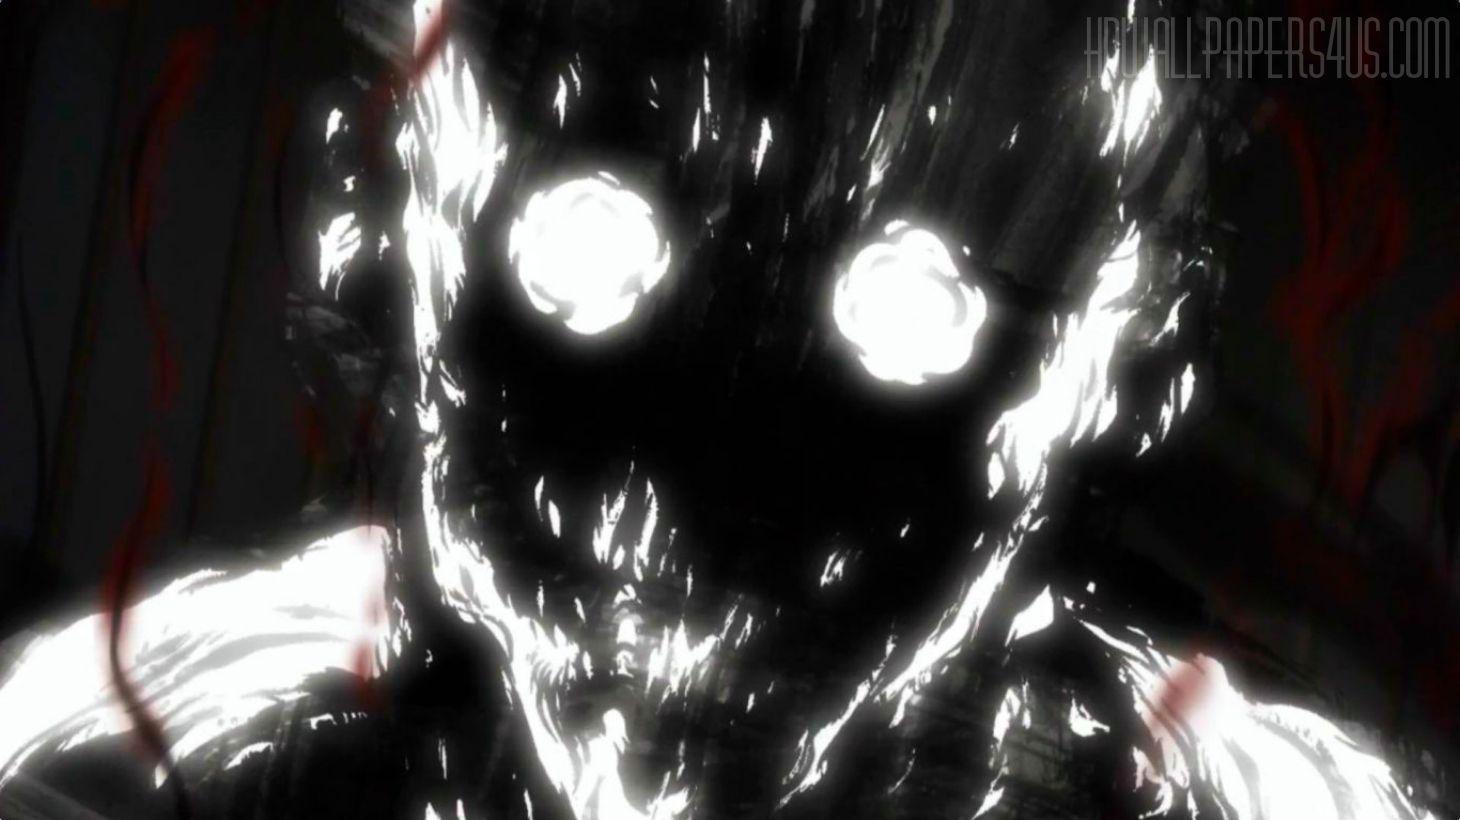 Dark Anime Wallpapers Top Free Dark Anime Backgrounds